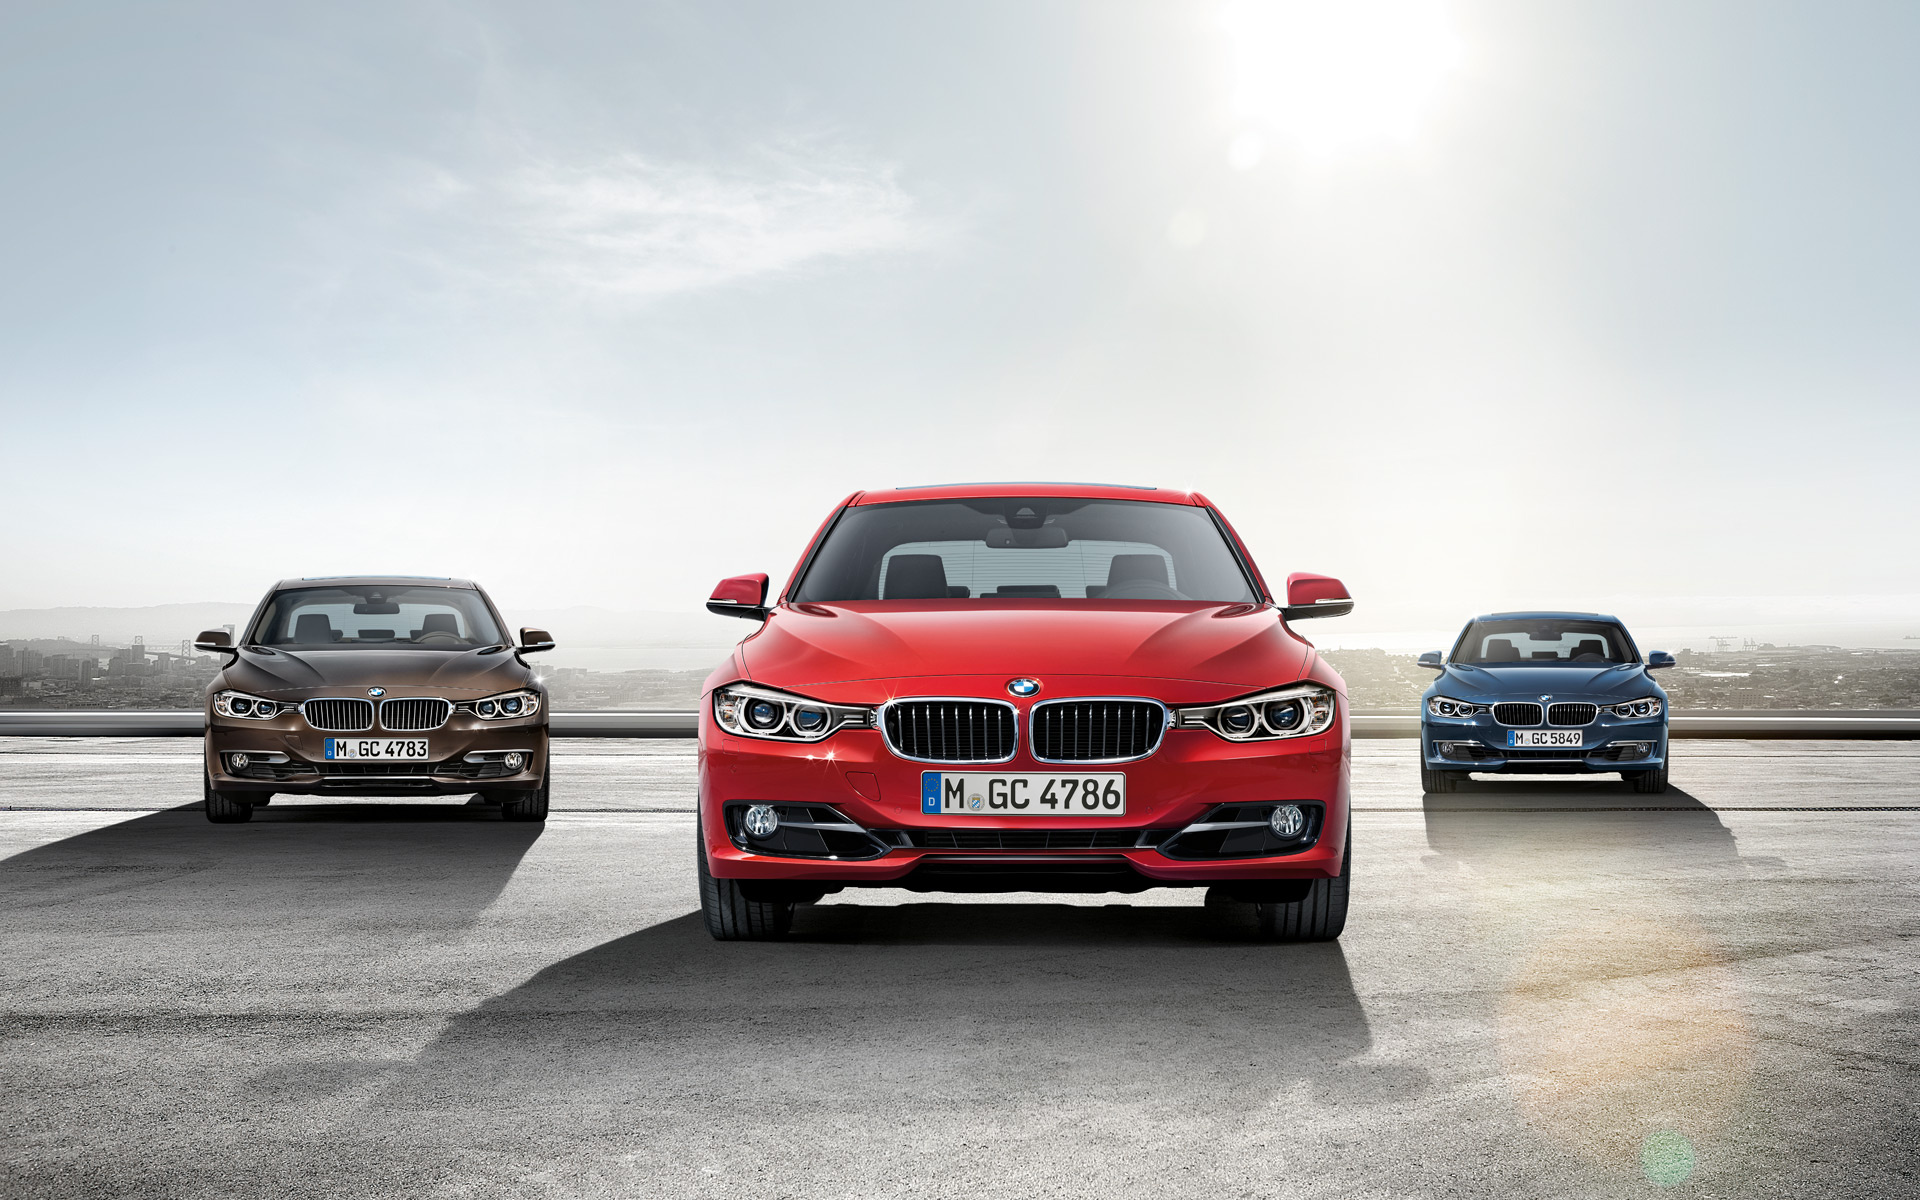 BMW 3 Series, Enchanting wallpaper, Facelifted model, Powerful performance, 1920x1200 HD Desktop